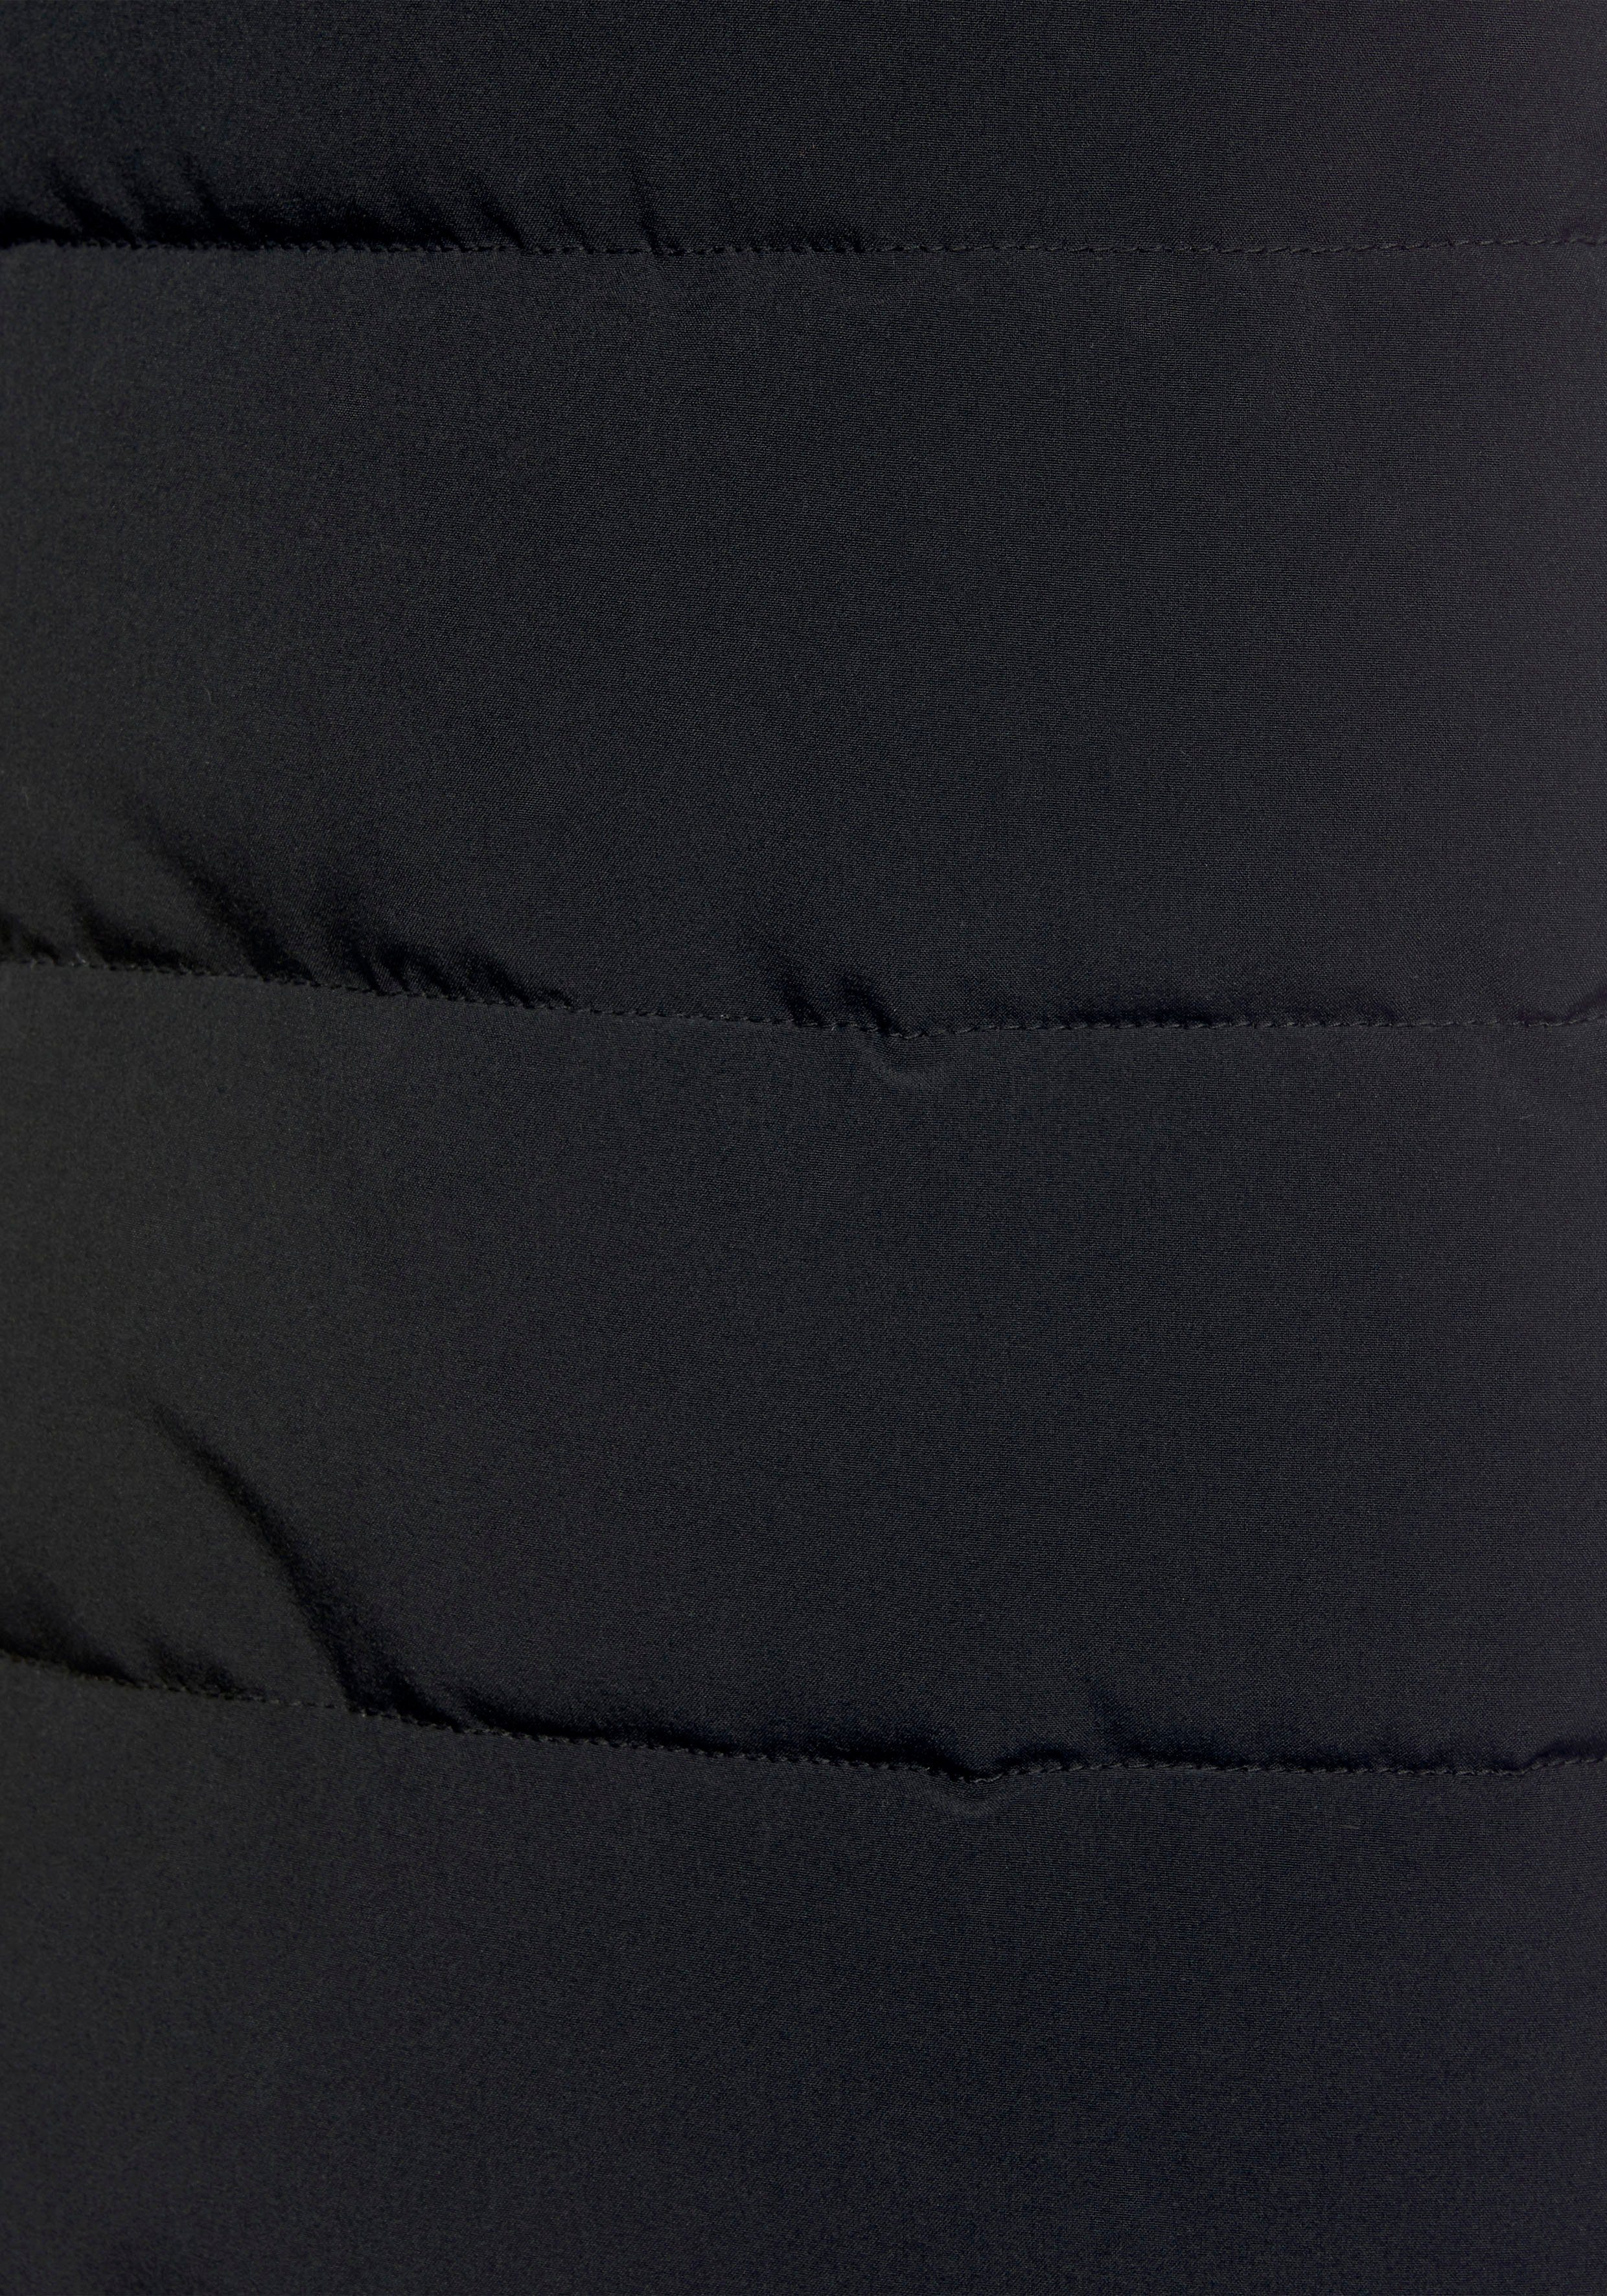 ALPENBLITZ Steppmantel Oslo long auf & nachhaltigem abnehmbarer Kuschel-Kapuze Material) (Jacke Markenprägung black aus mit dem Gürtel Mantel